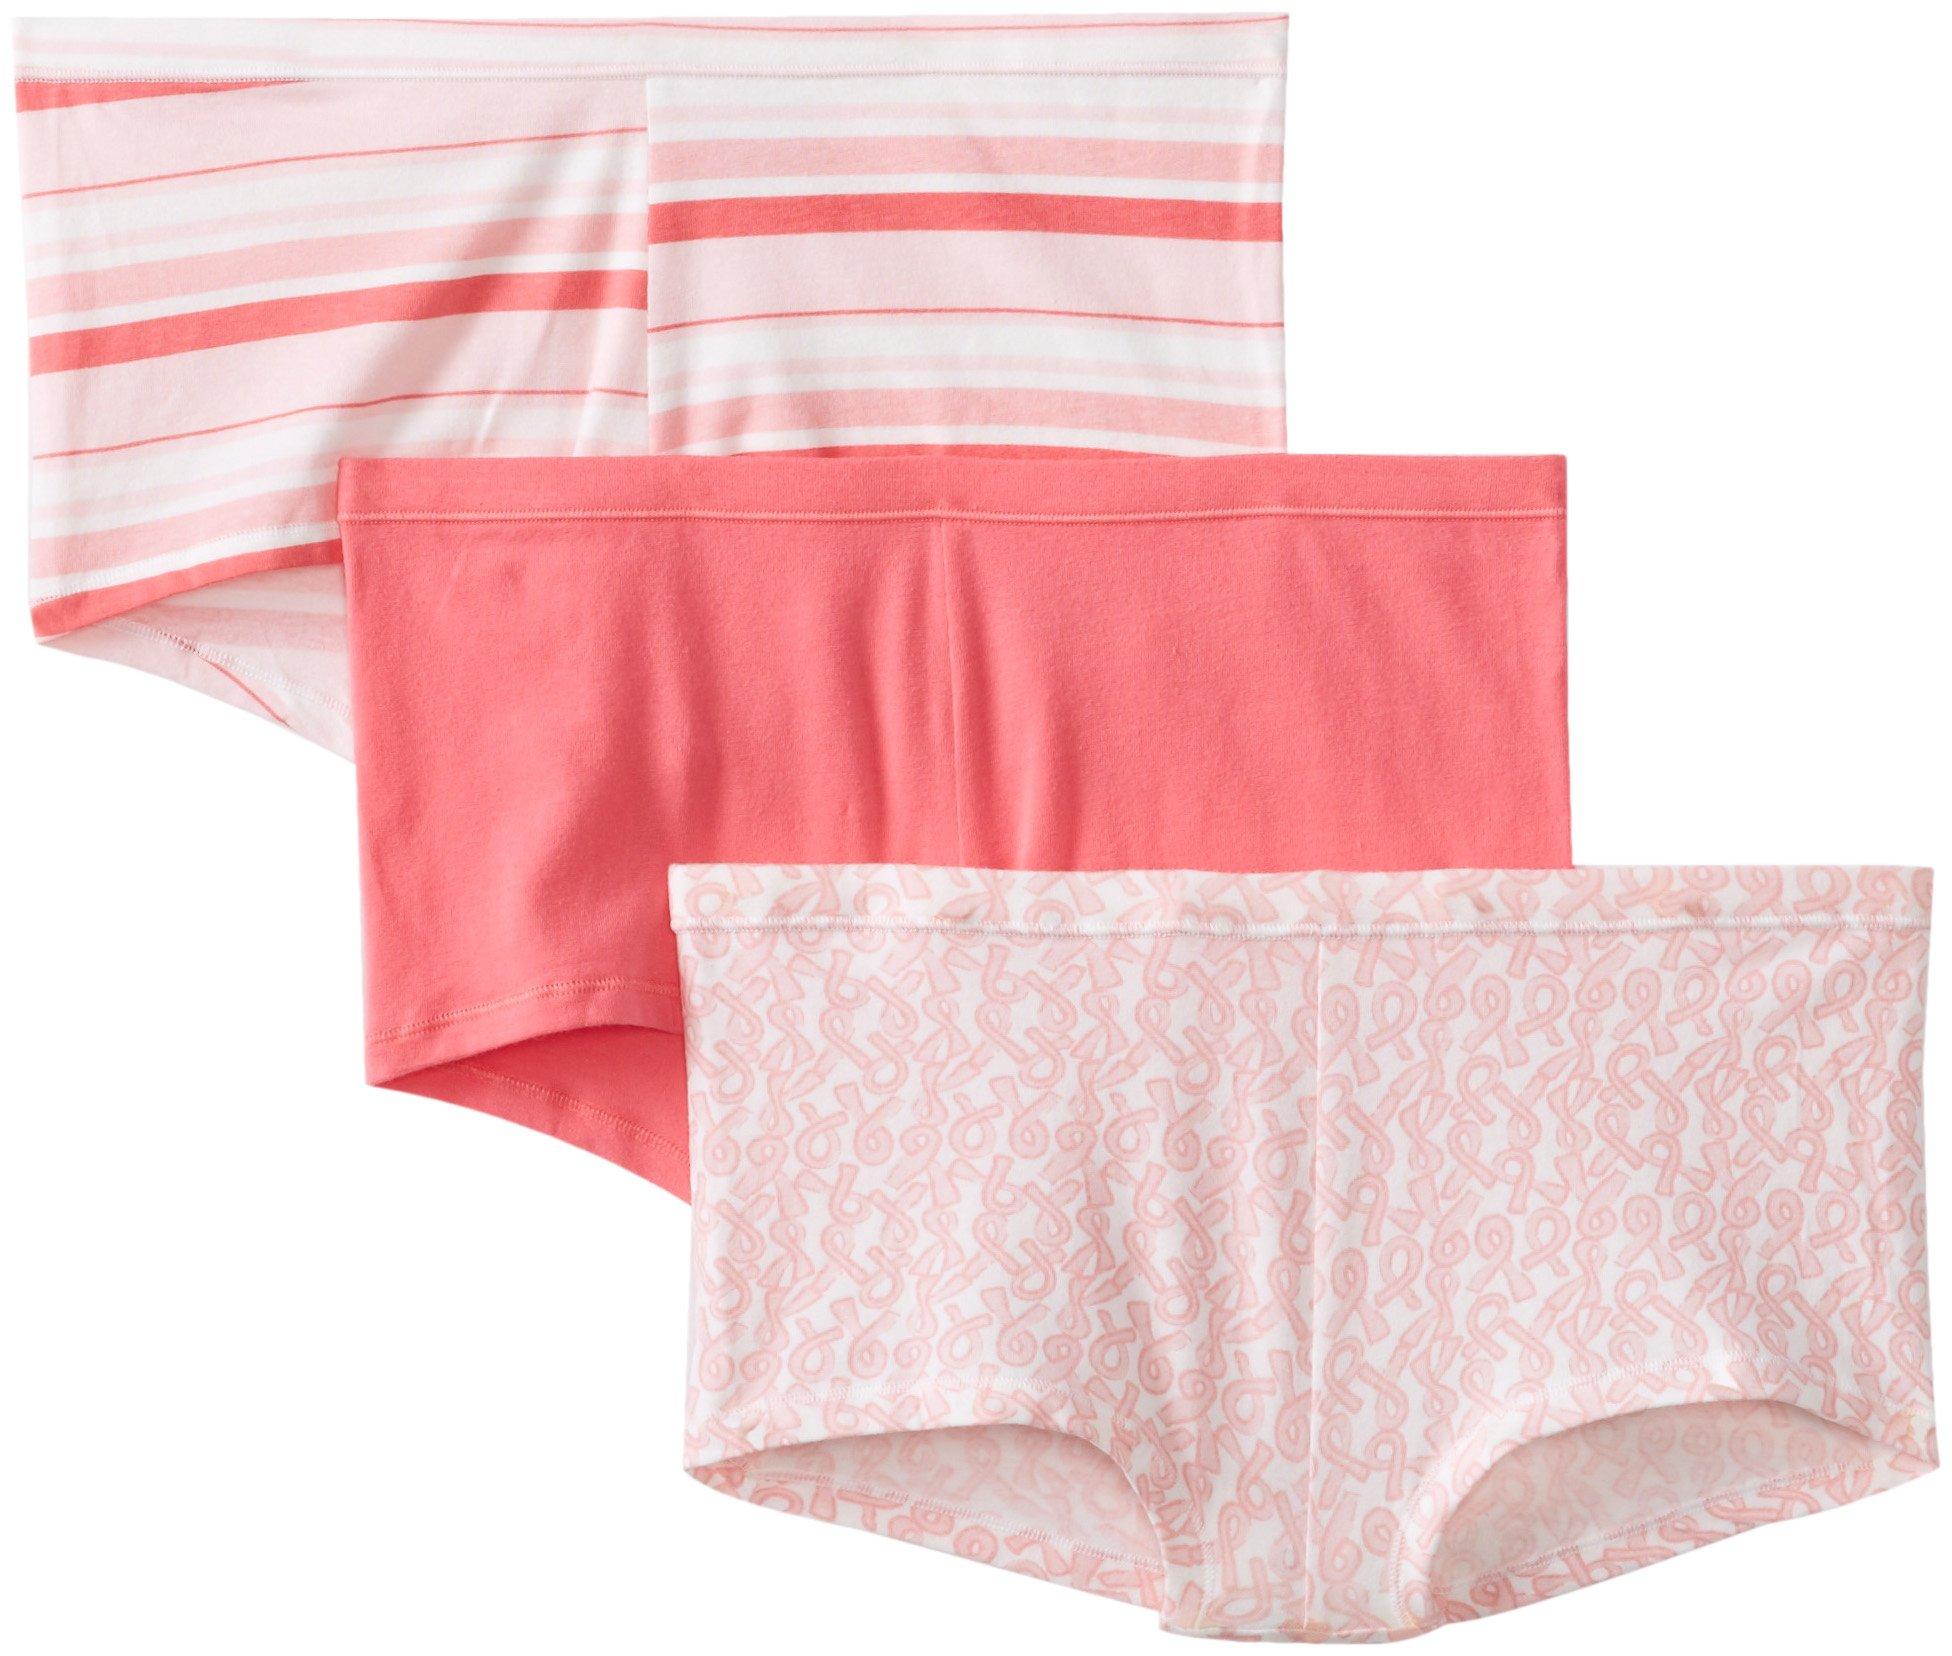 Hanes 3 Pack Comfortsoft Cotton Stretch Boy Brief in Pink